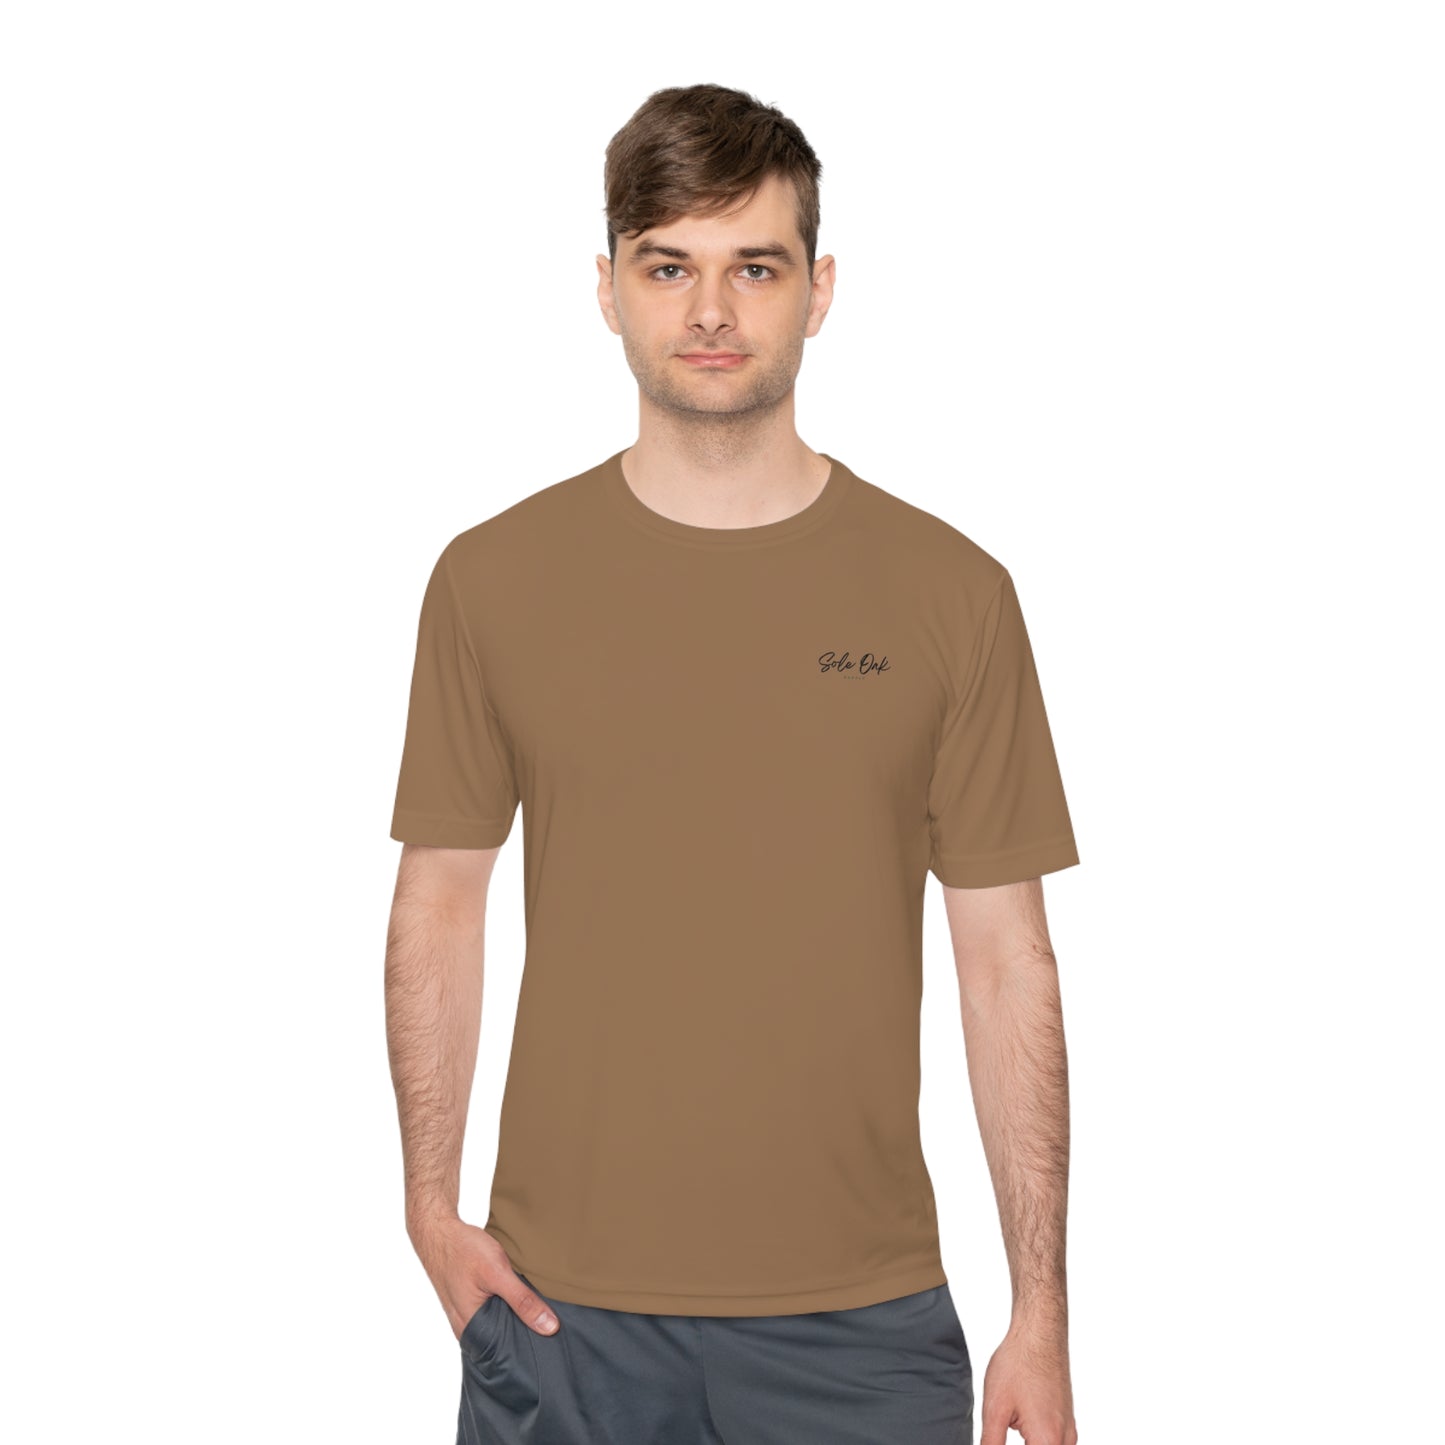 Indiana Quail Sport-Tek Polyester T Shirt 7 colors